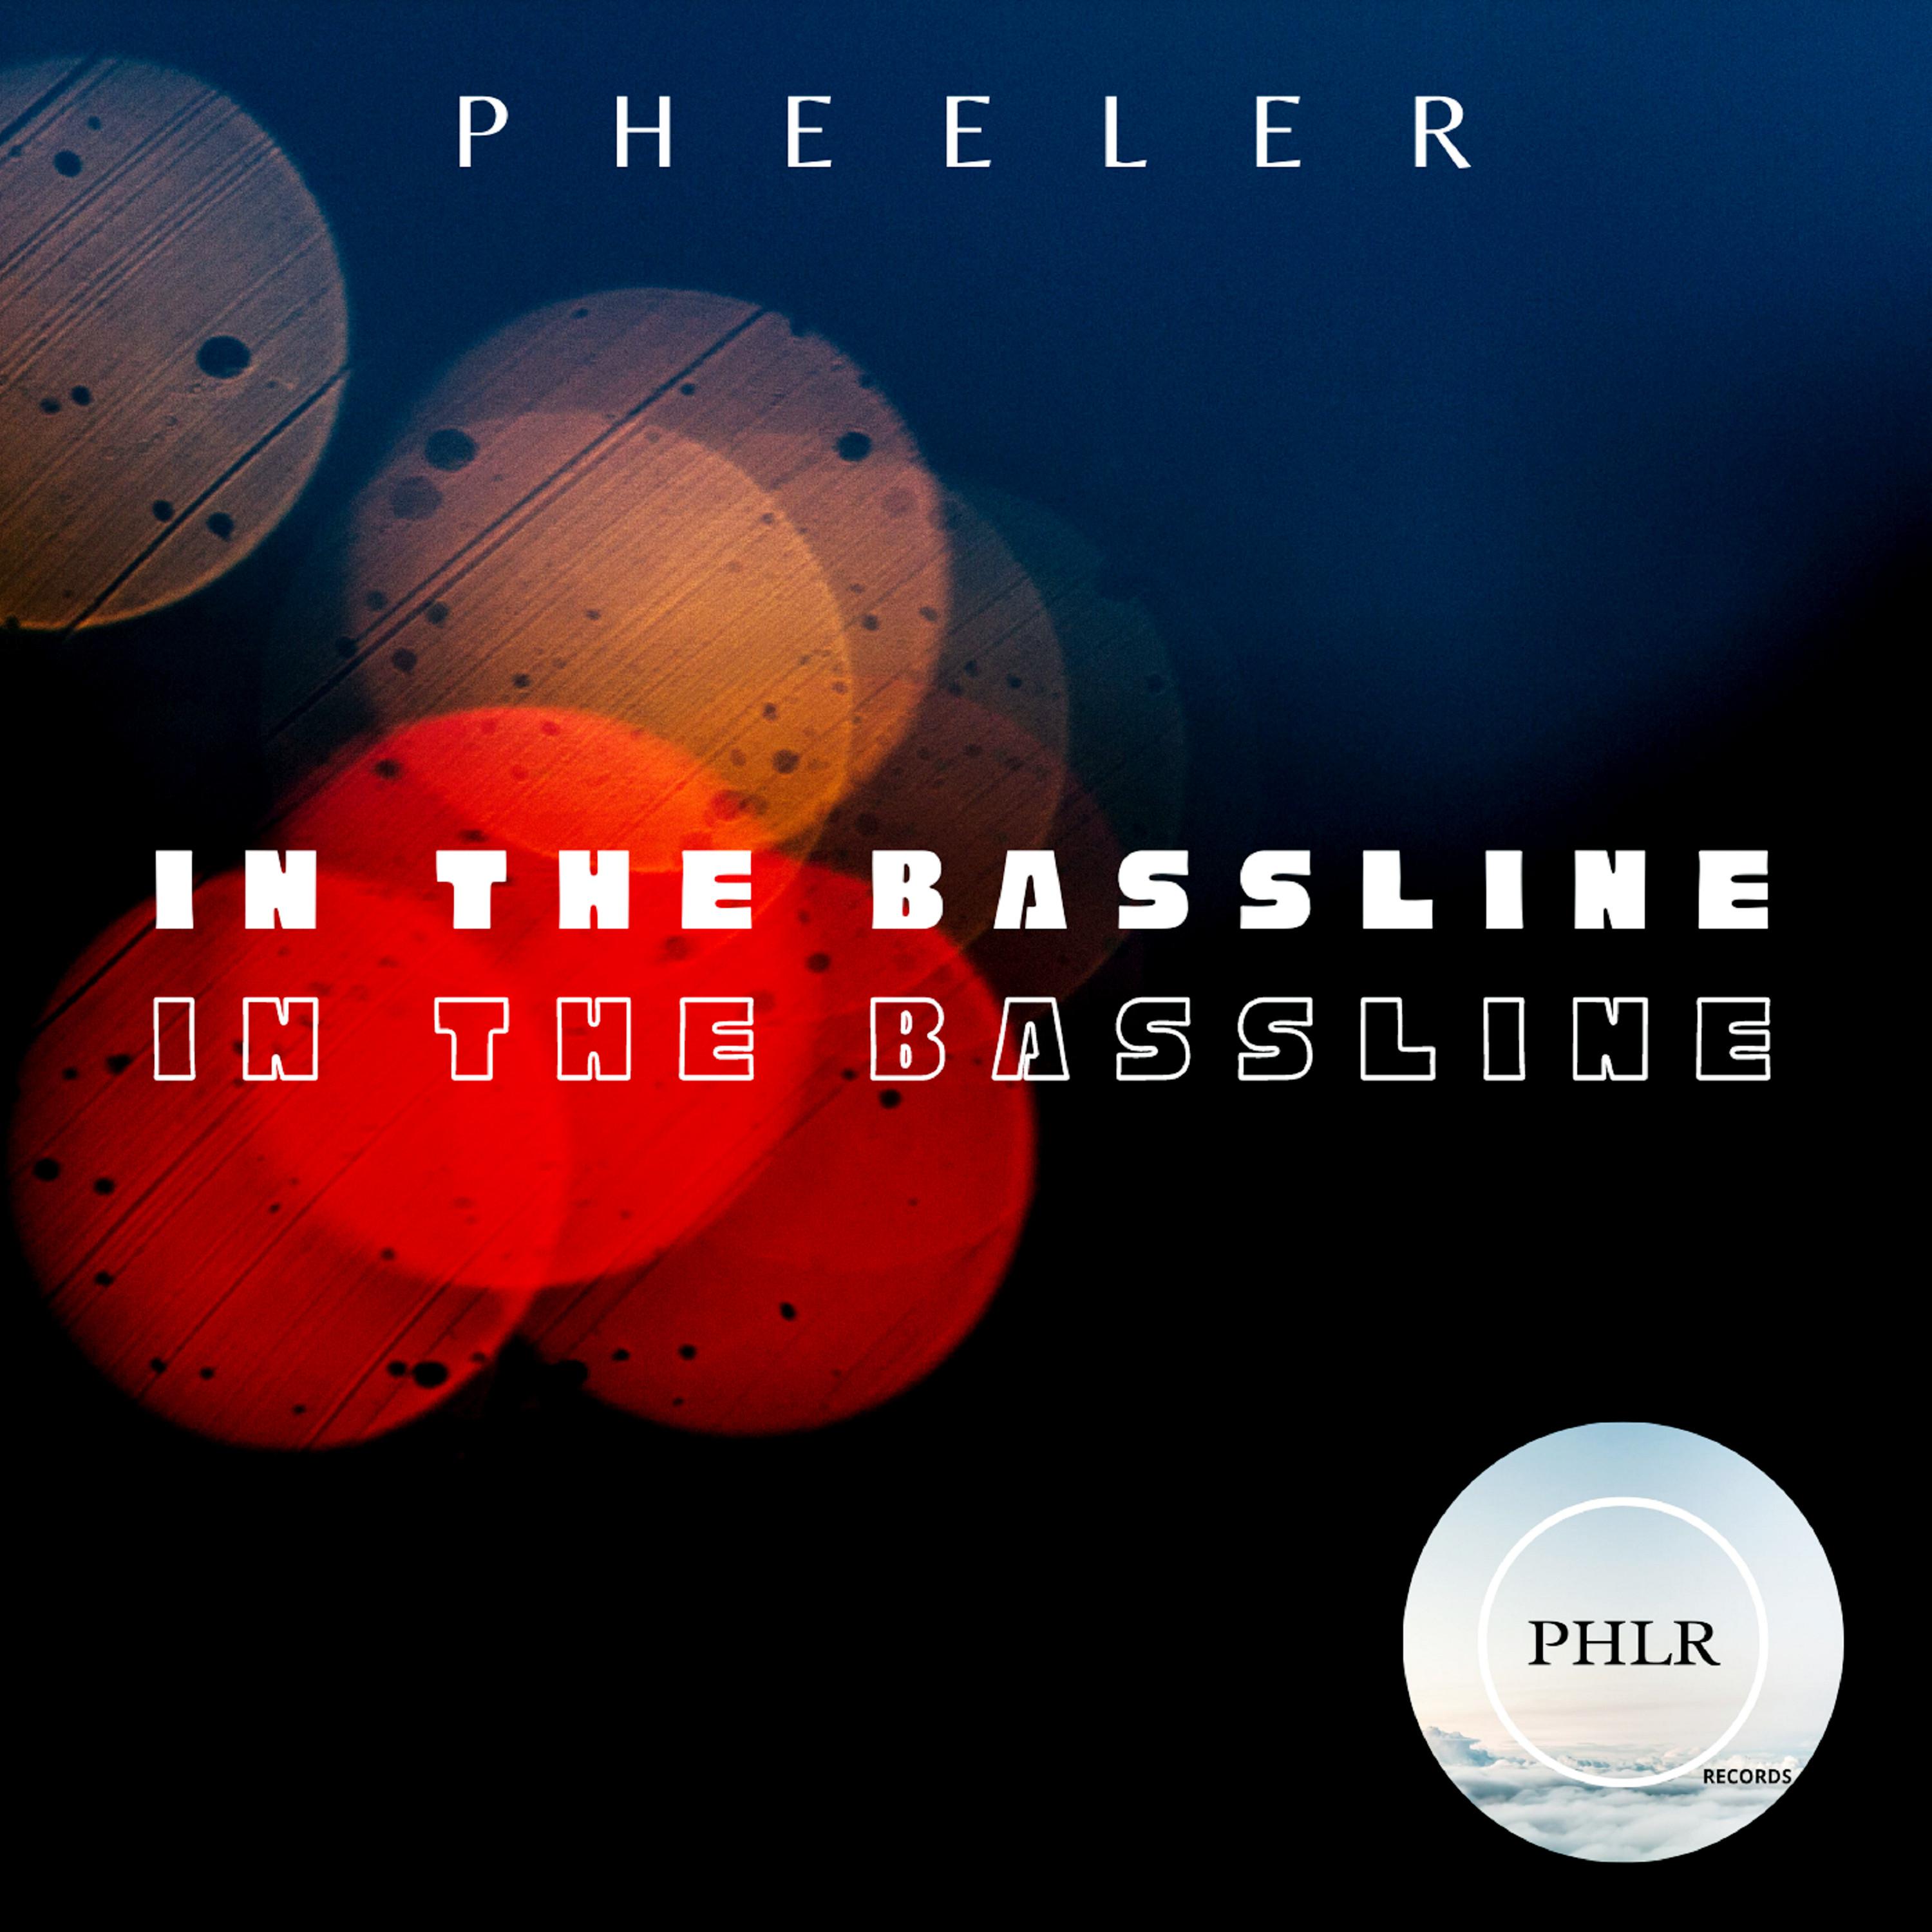 Pheeler - In the Bassline